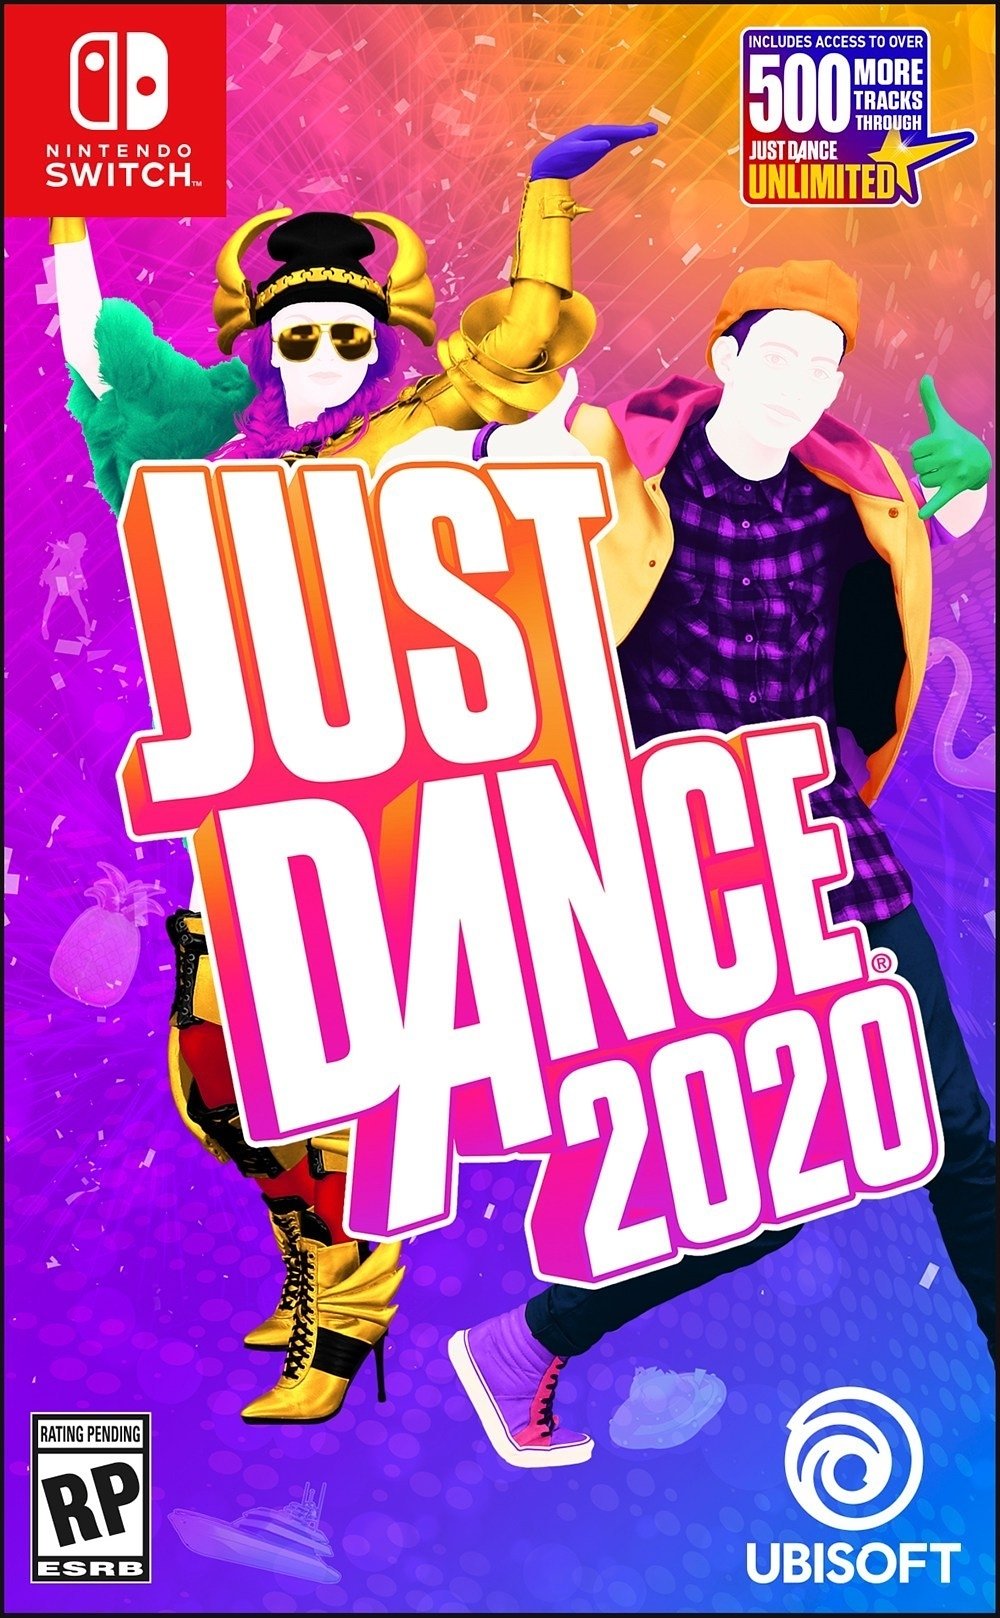 Nintendo Switch Just Dance 2020 舞力全開 2020 (中英文版) 4